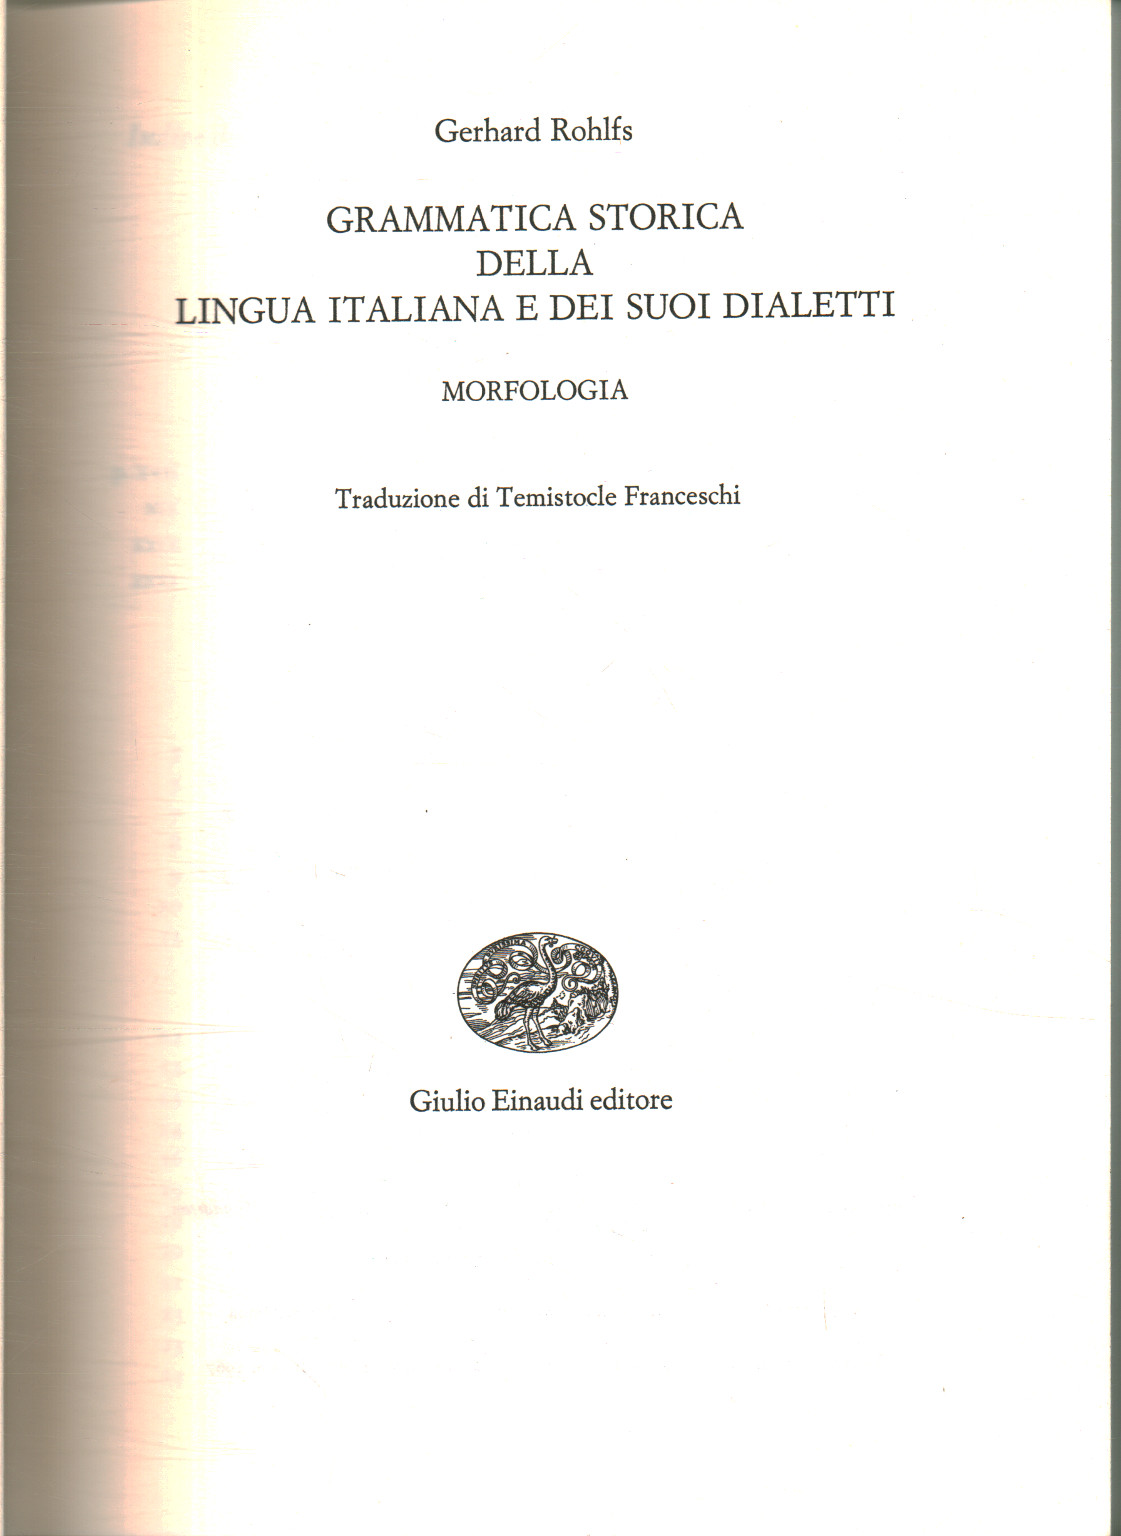 Historical grammar of the Italian language and his, Gerhard Rohlfs